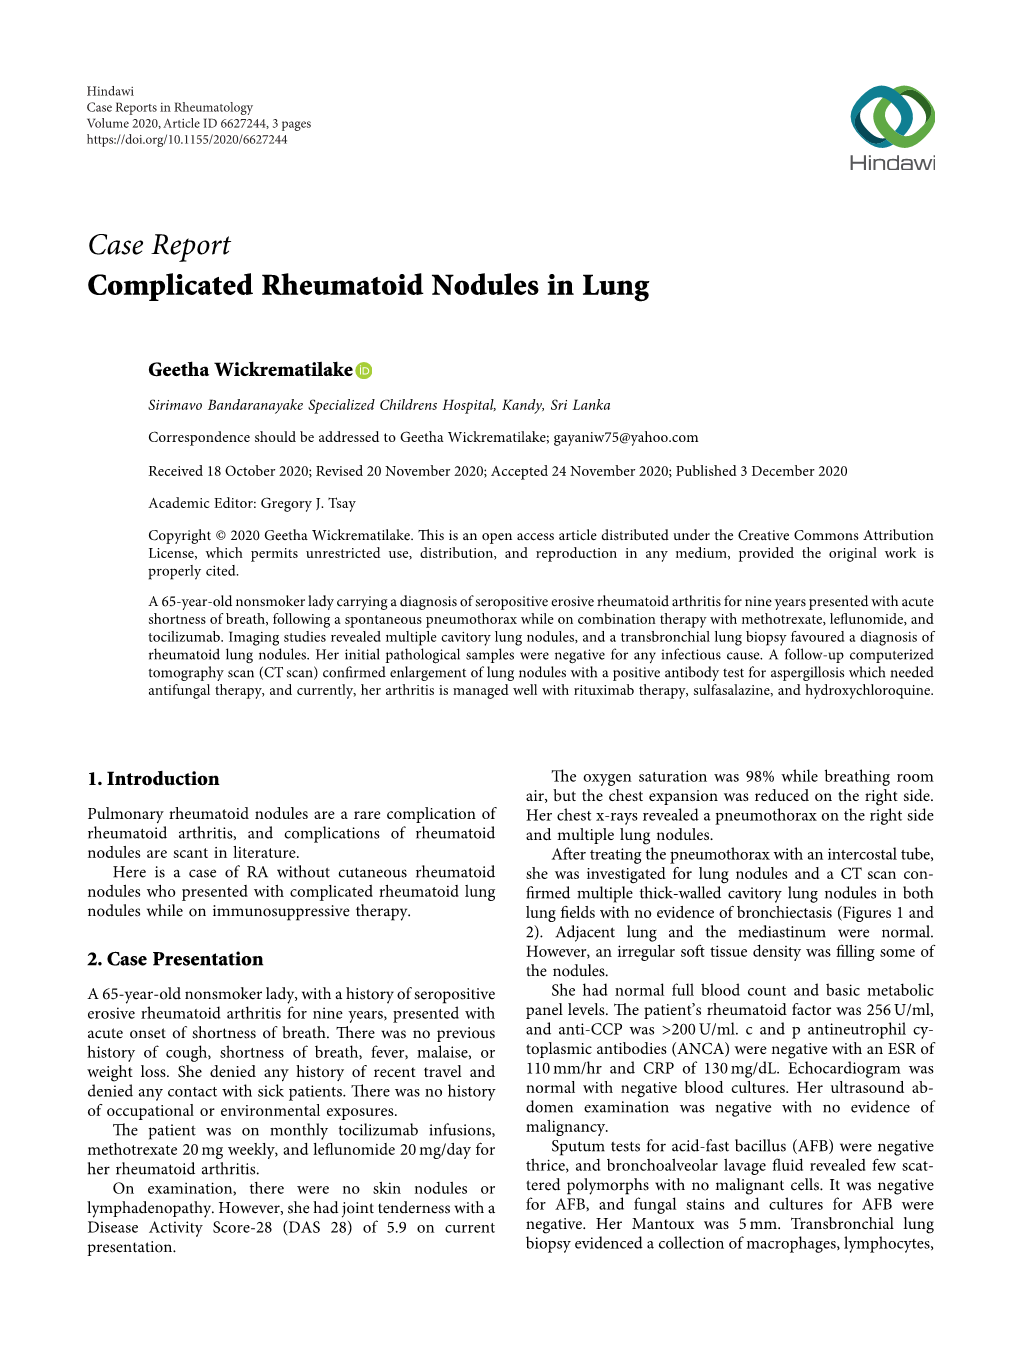 Complicated Rheumatoid Nodules in Lung